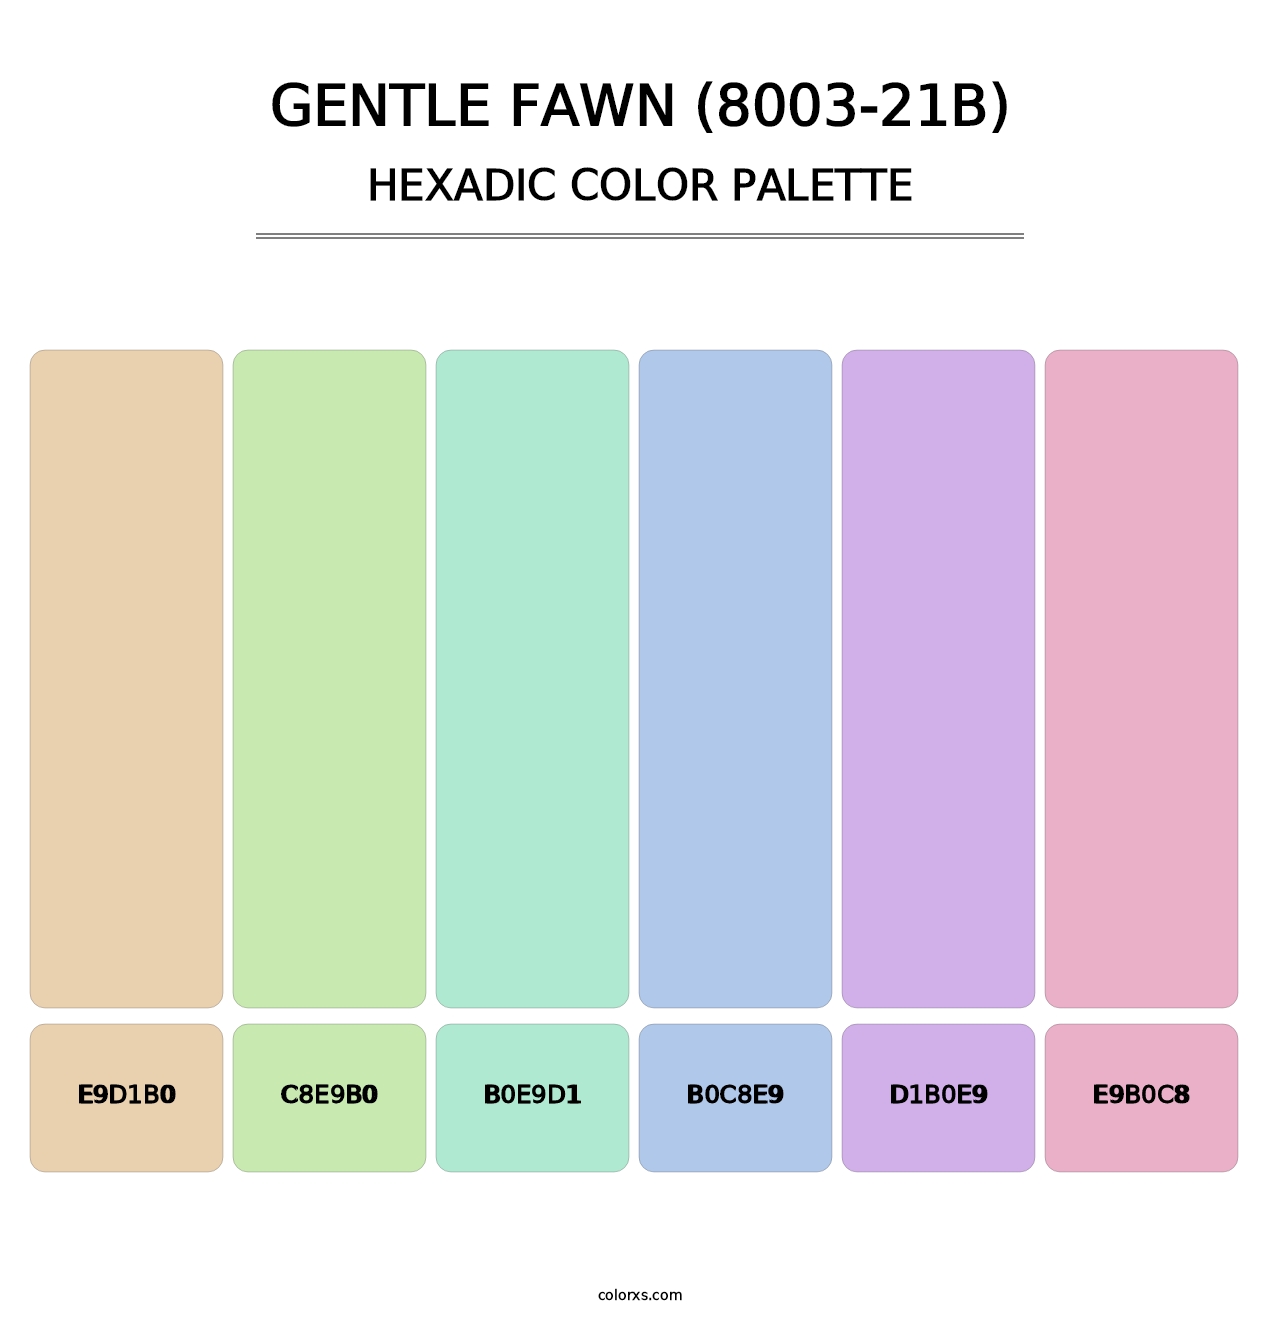 Gentle Fawn (8003-21B) - Hexadic Color Palette